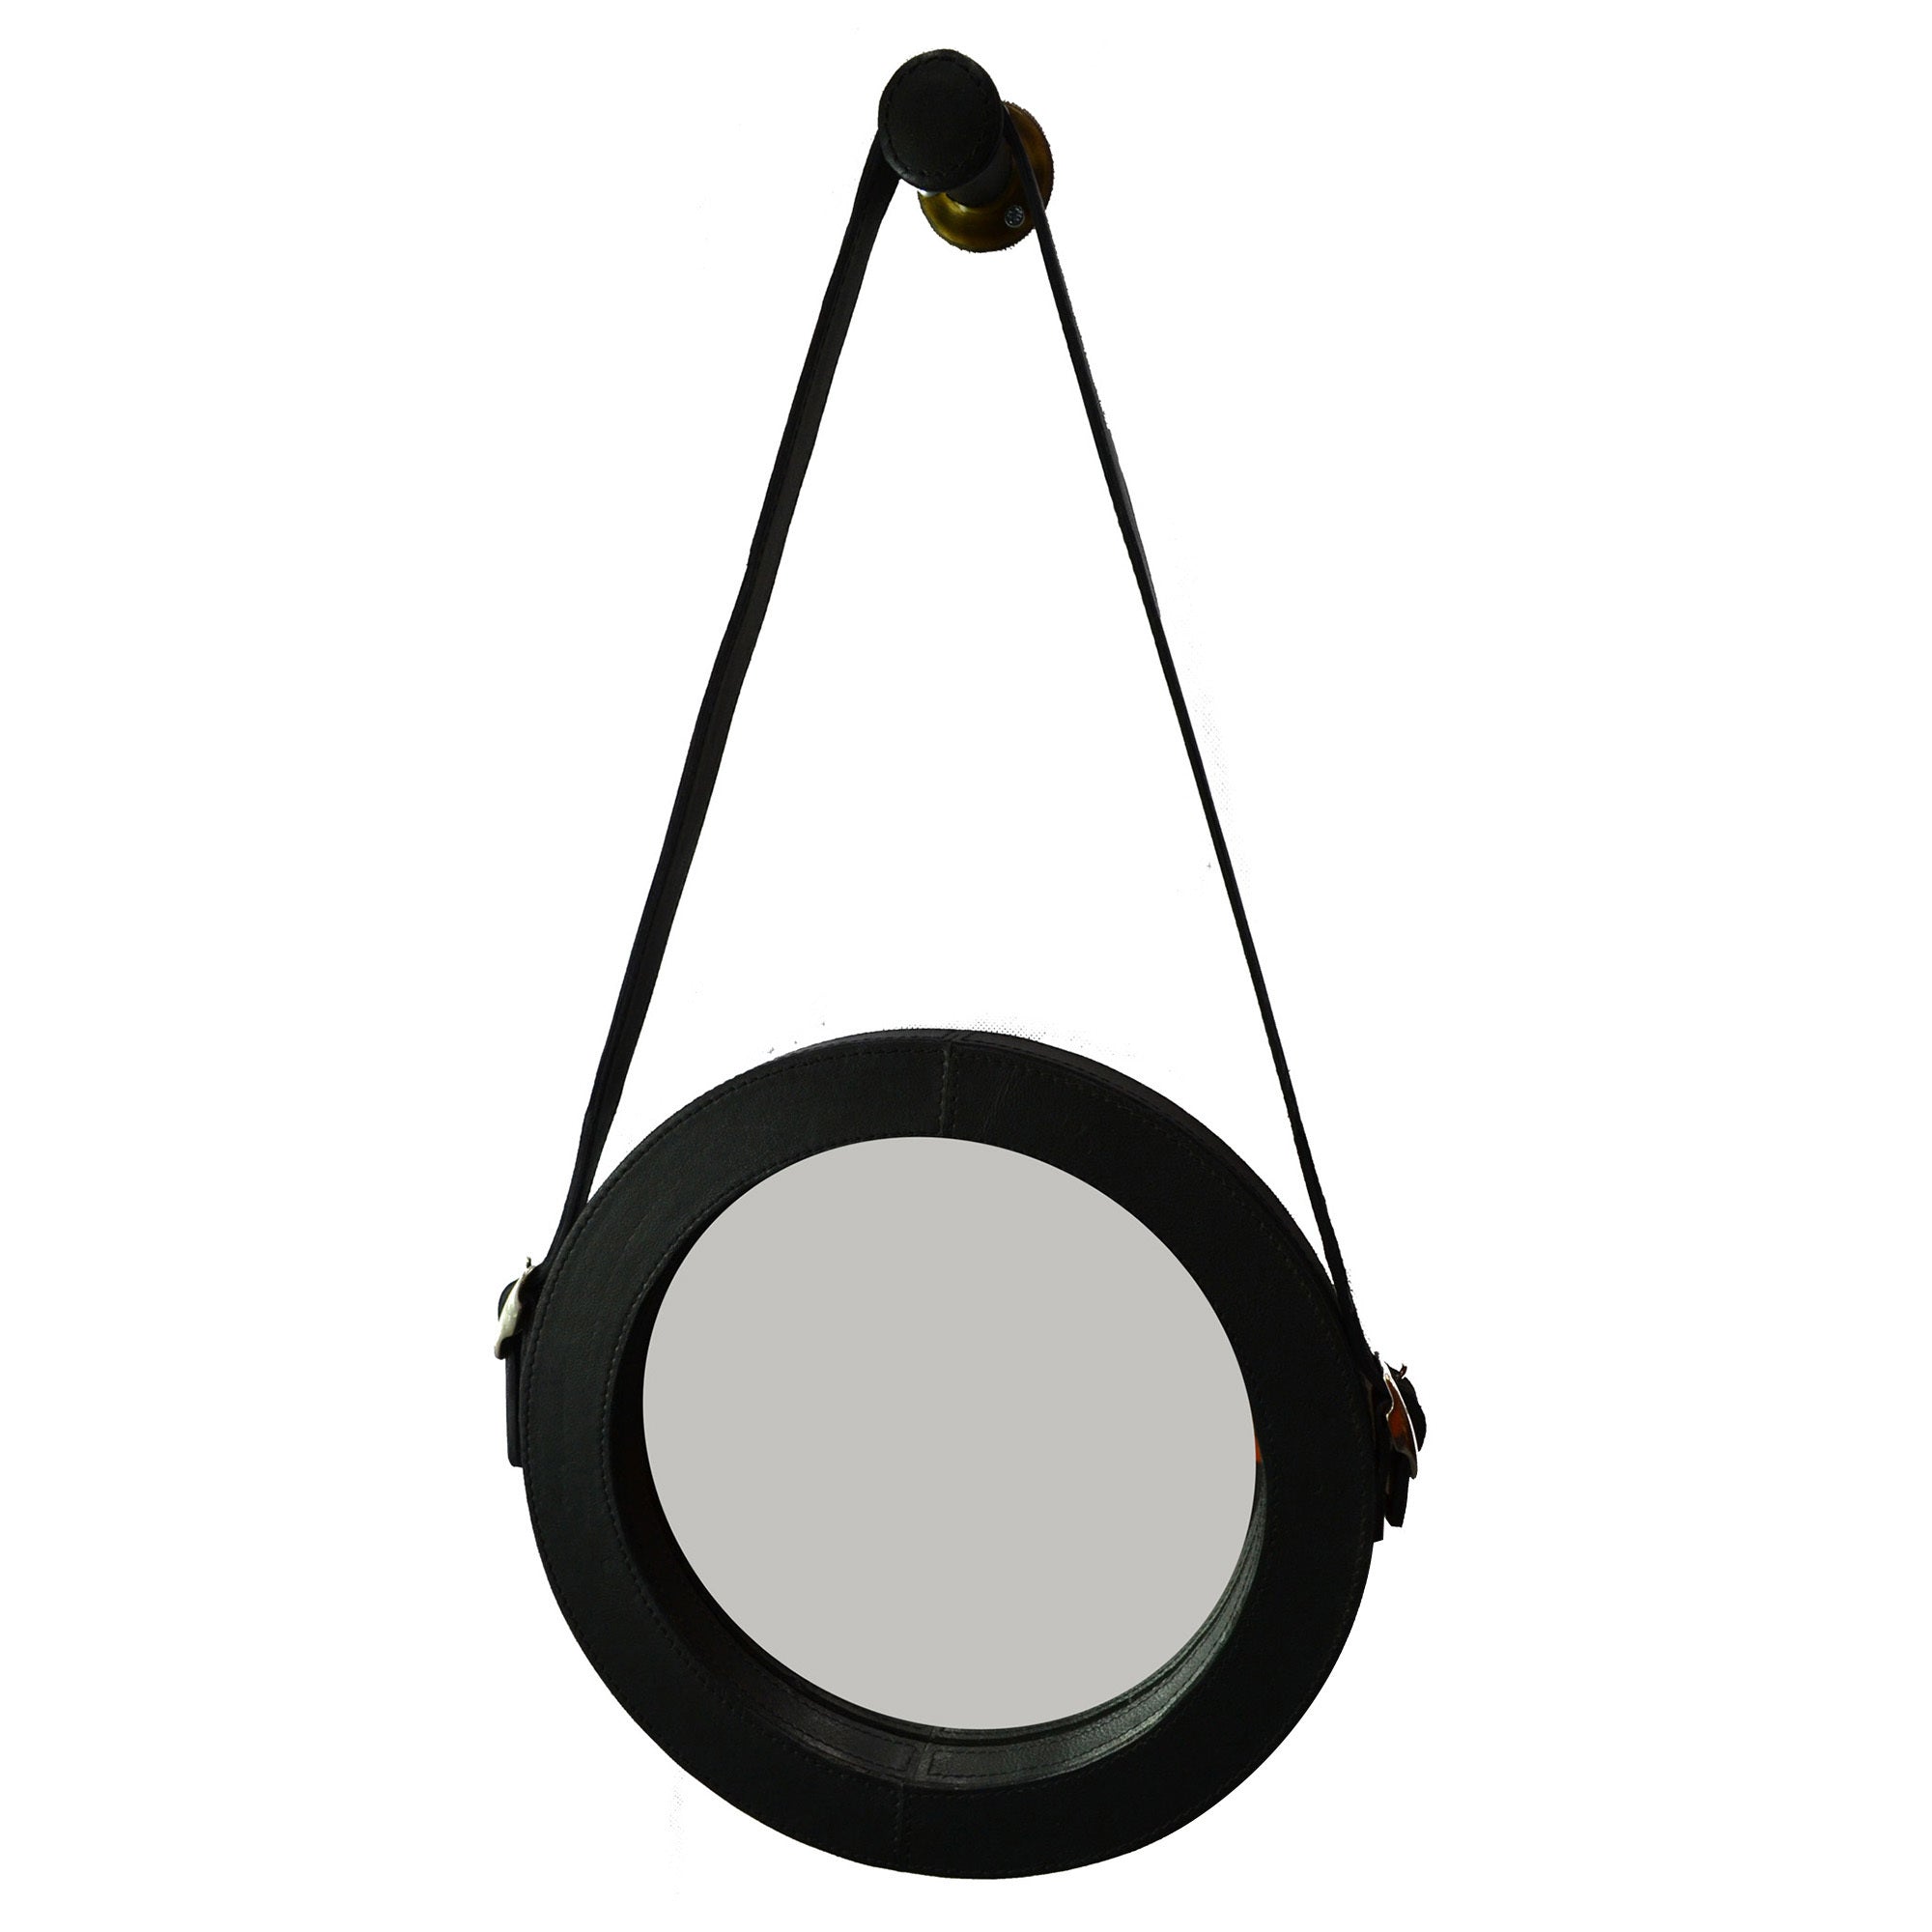 Fahui Small Round Leather Mirror - Black - Notbrand